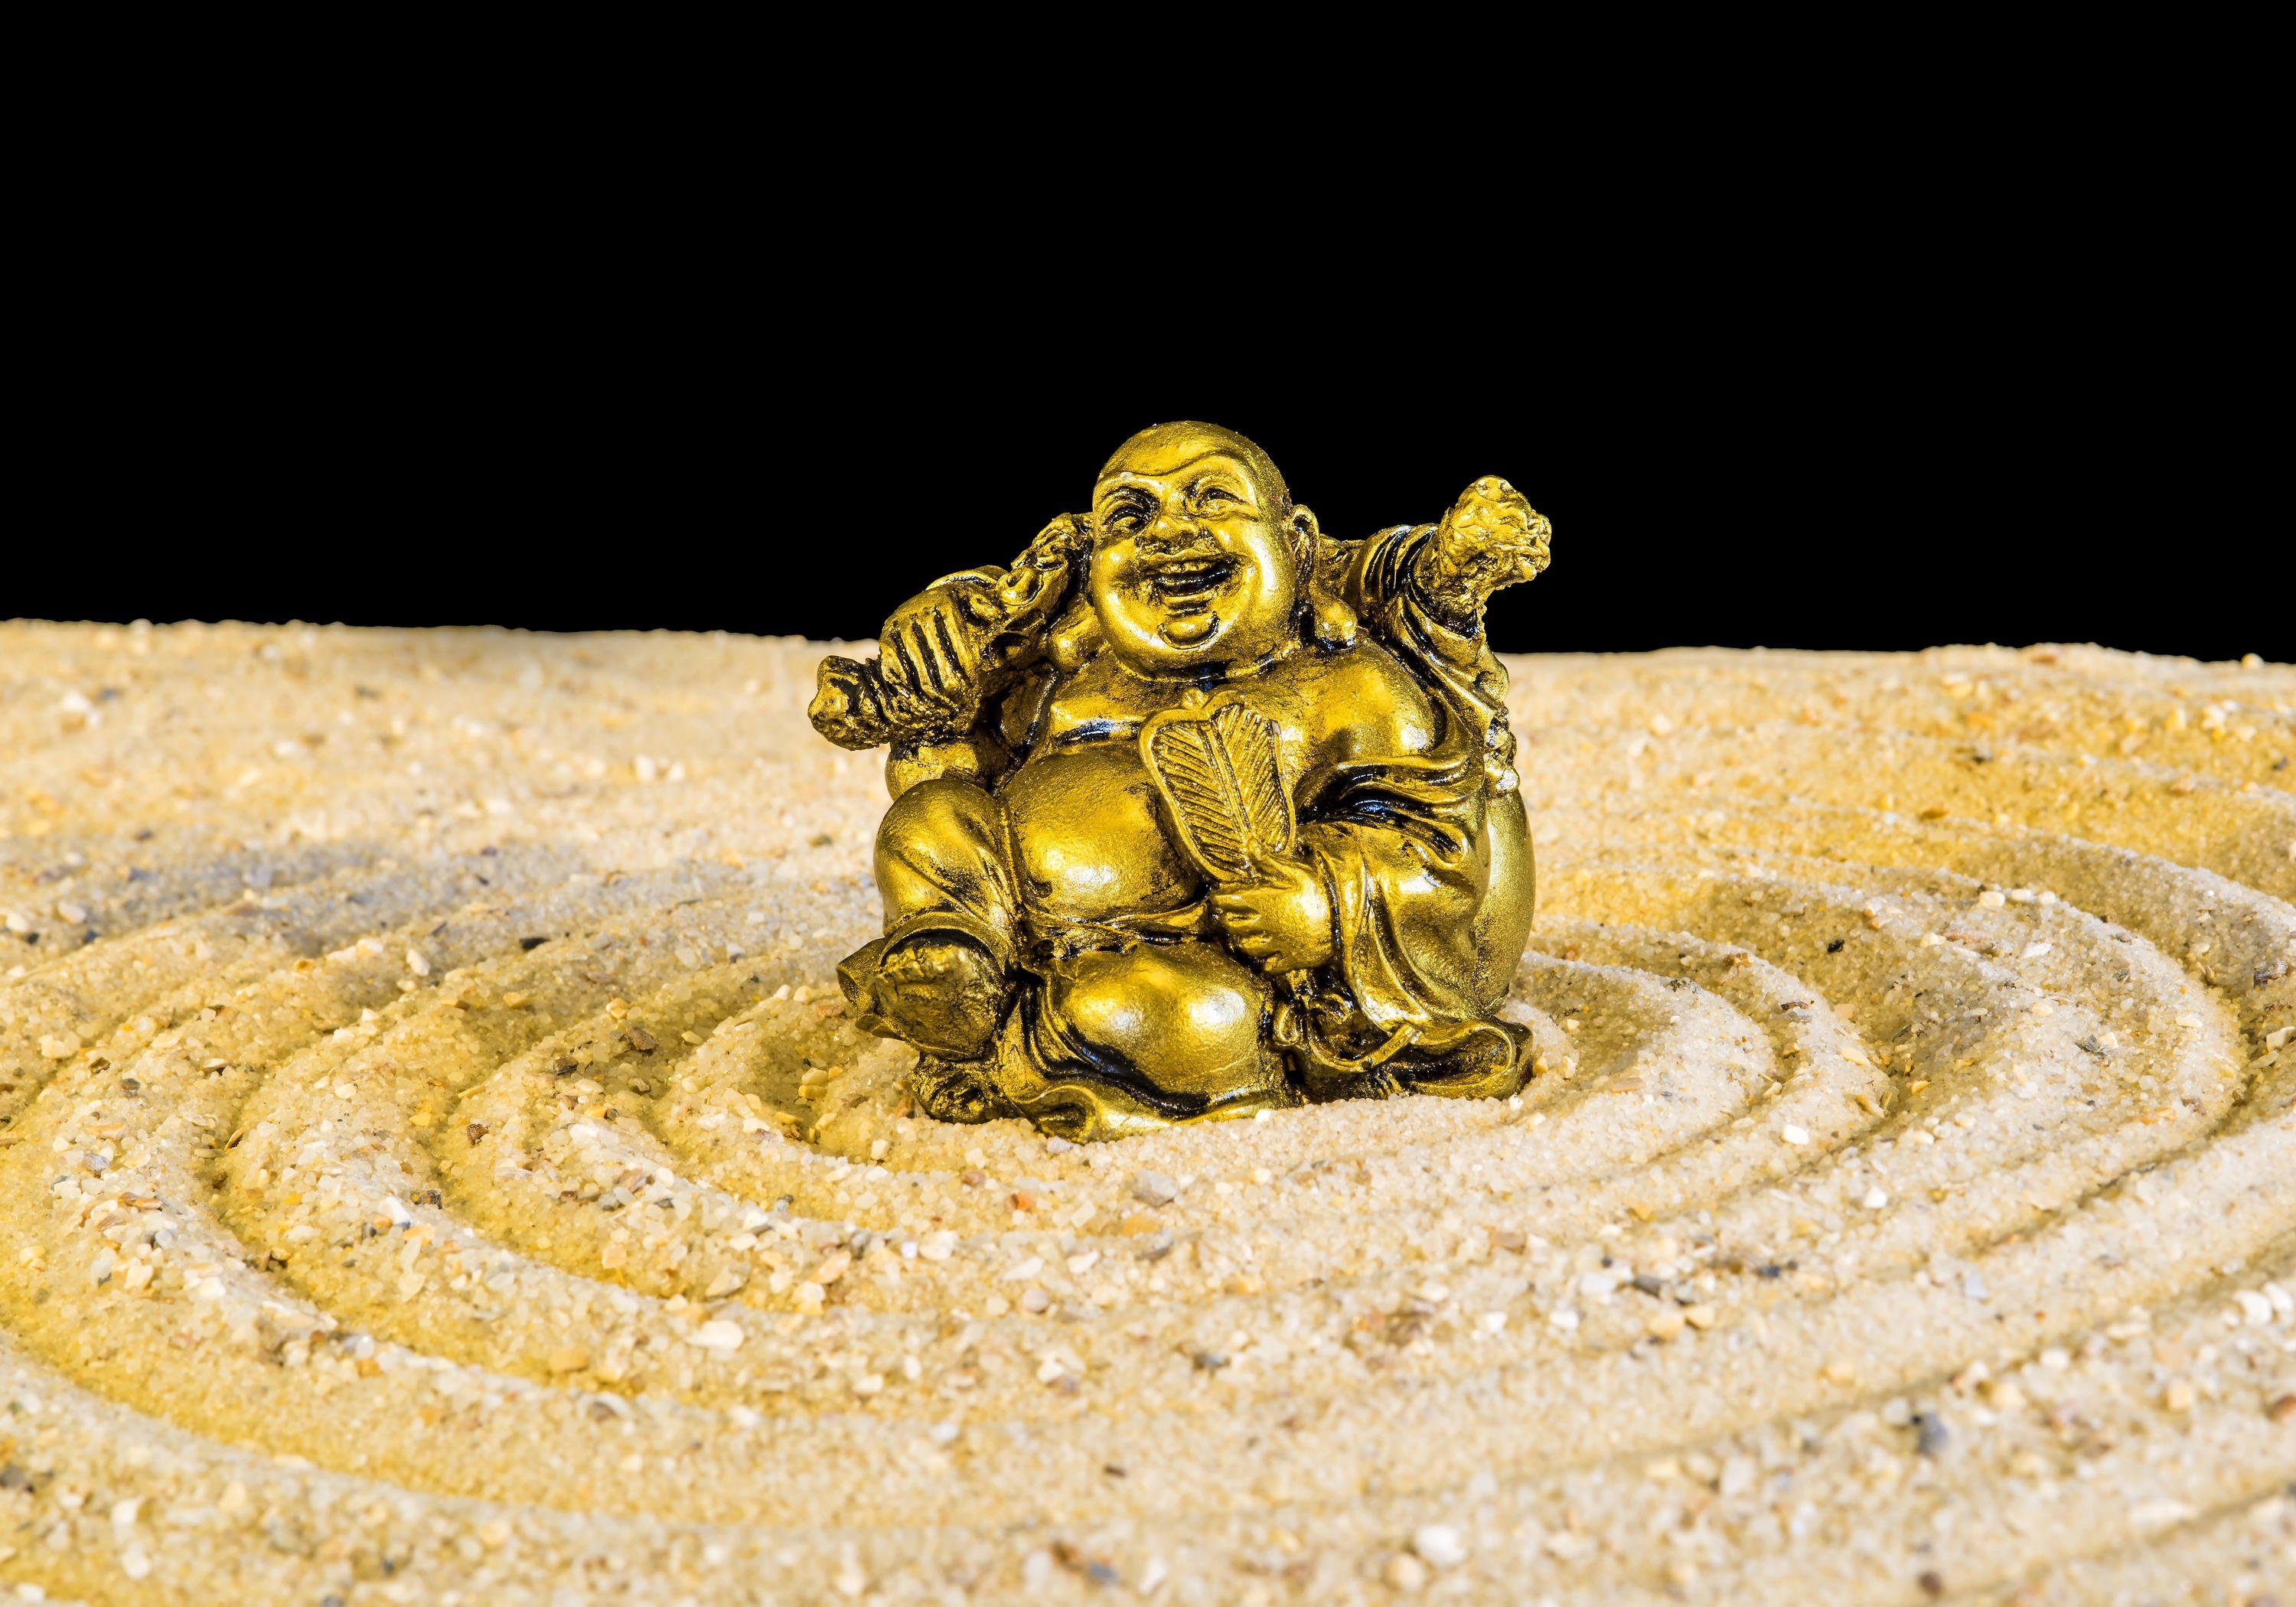 wandmotiv24 Fototapete Goldener Buddha im Zen-Kreis, glatt, Wandtapete, Motivtapete, matt, Vliestapete